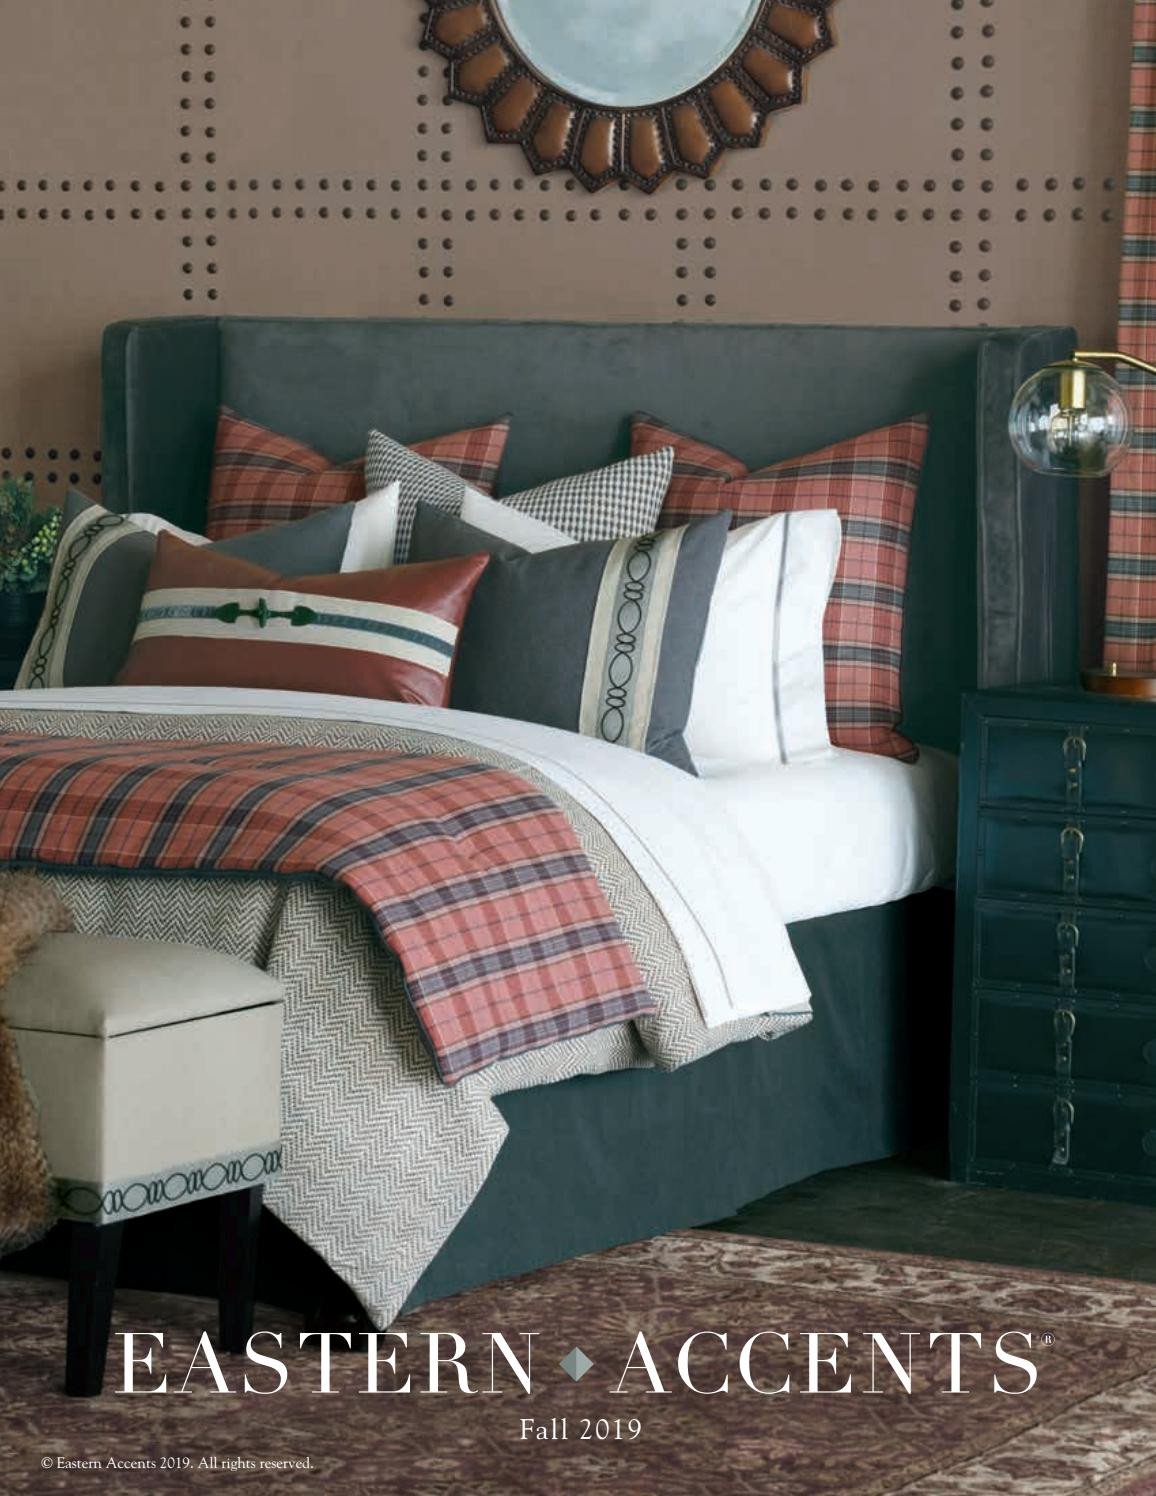 Log King Size Bedroom Set Best Of Eastern Accents Designer Bedding Collection by Eastern